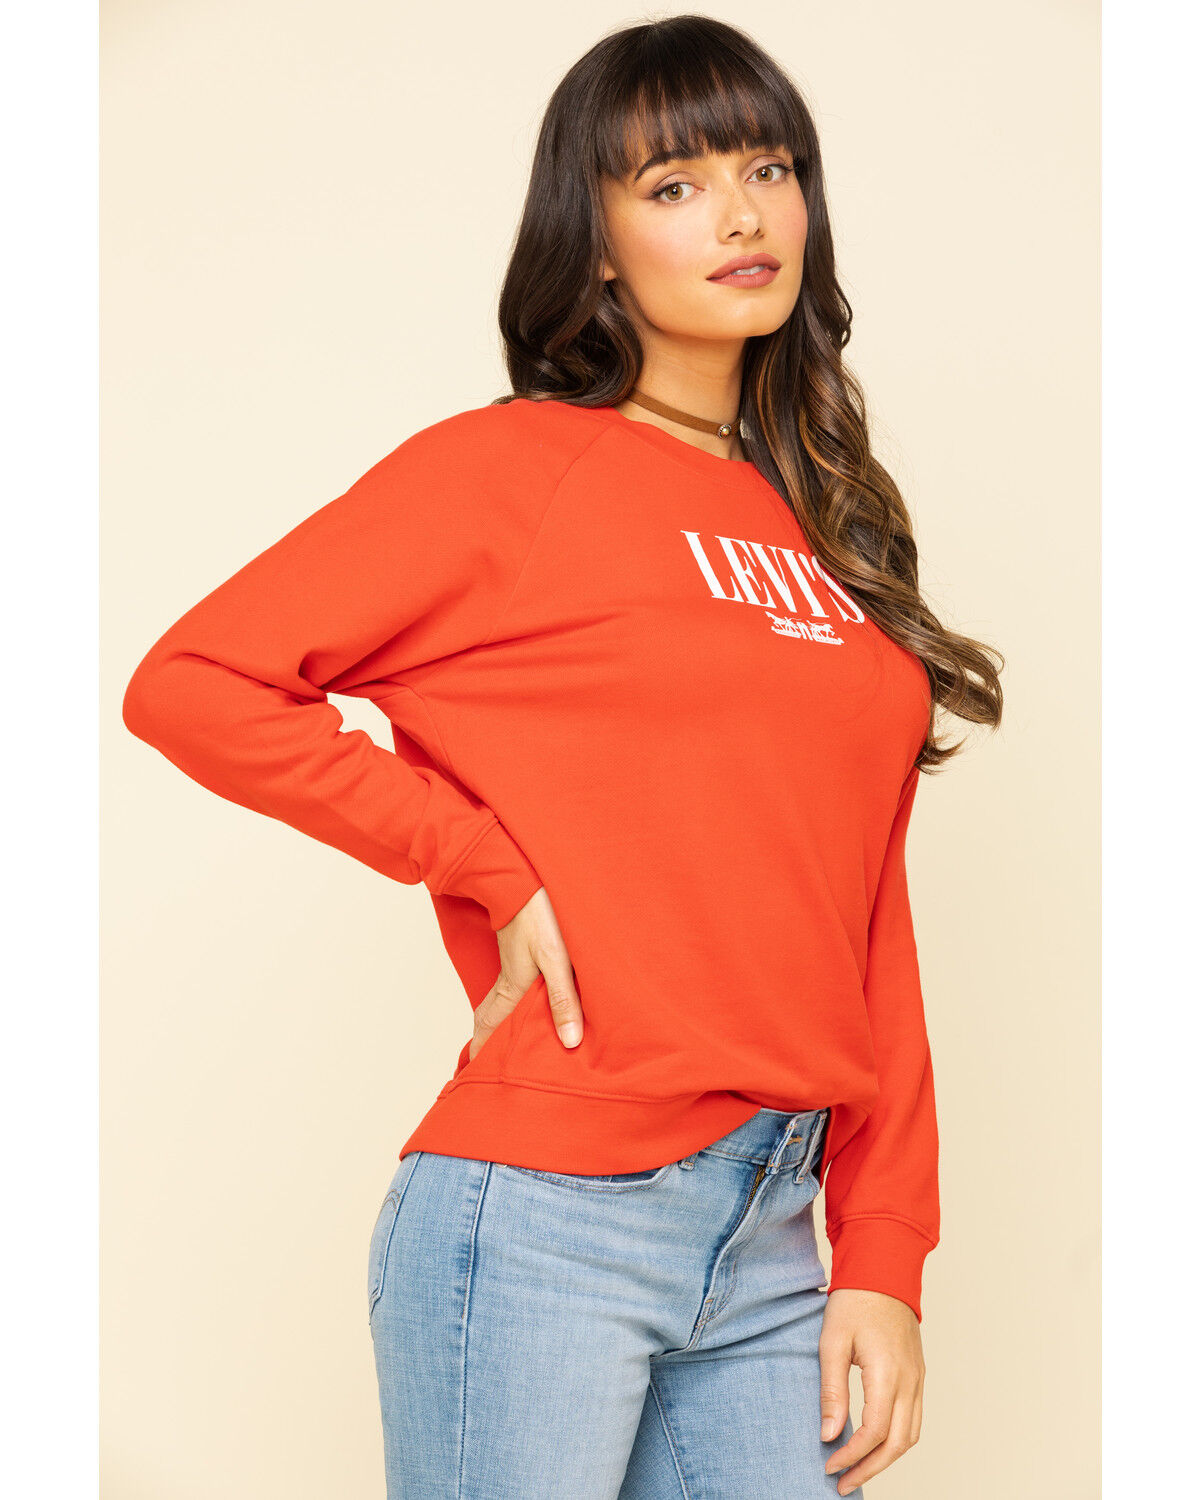 levi's red sweatshirt womens